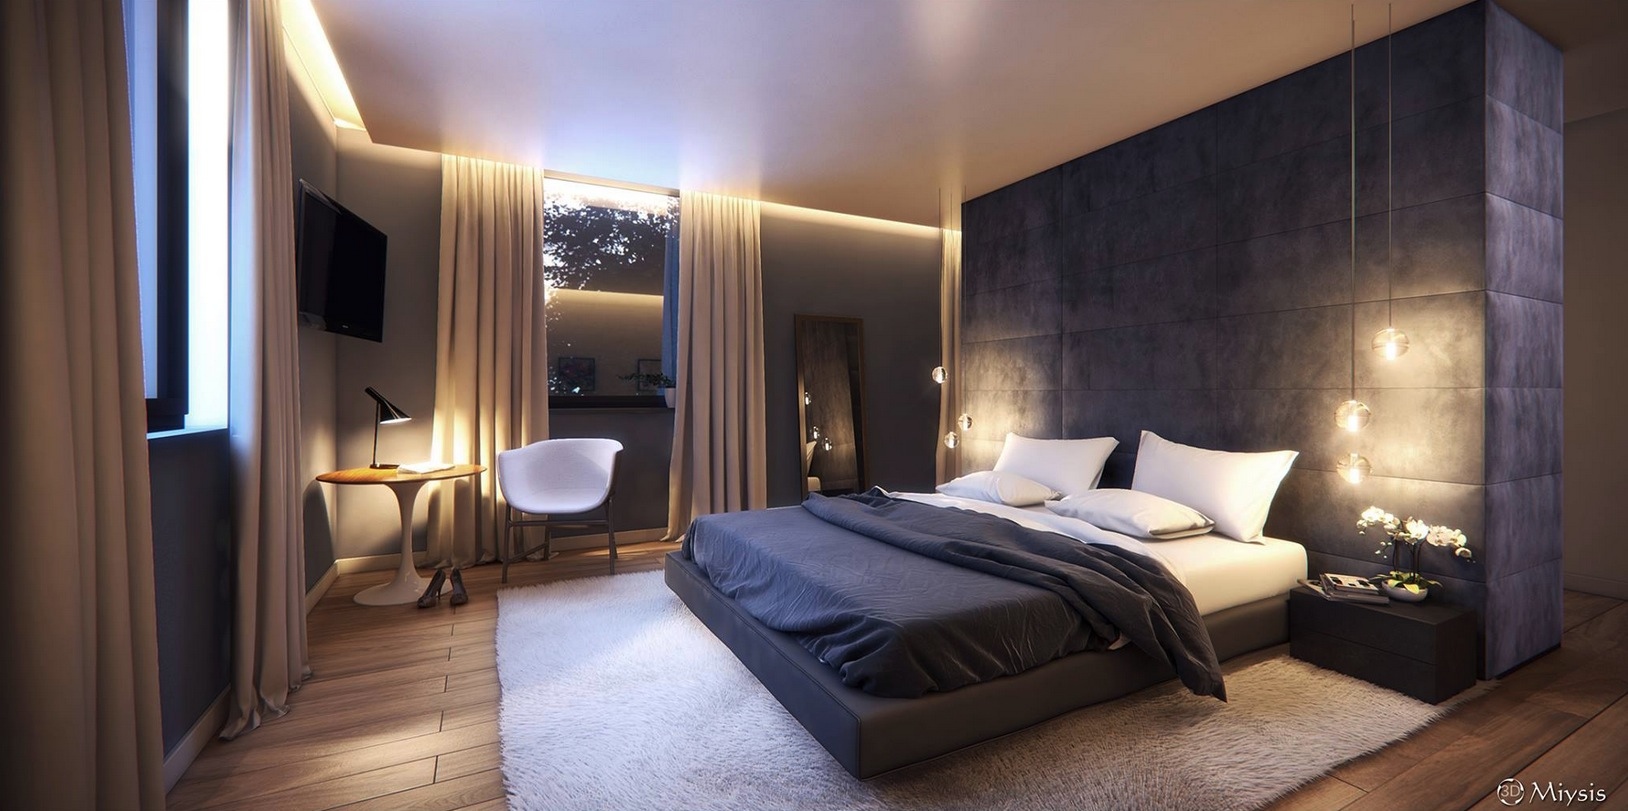 20 Modern Bedroom Designs